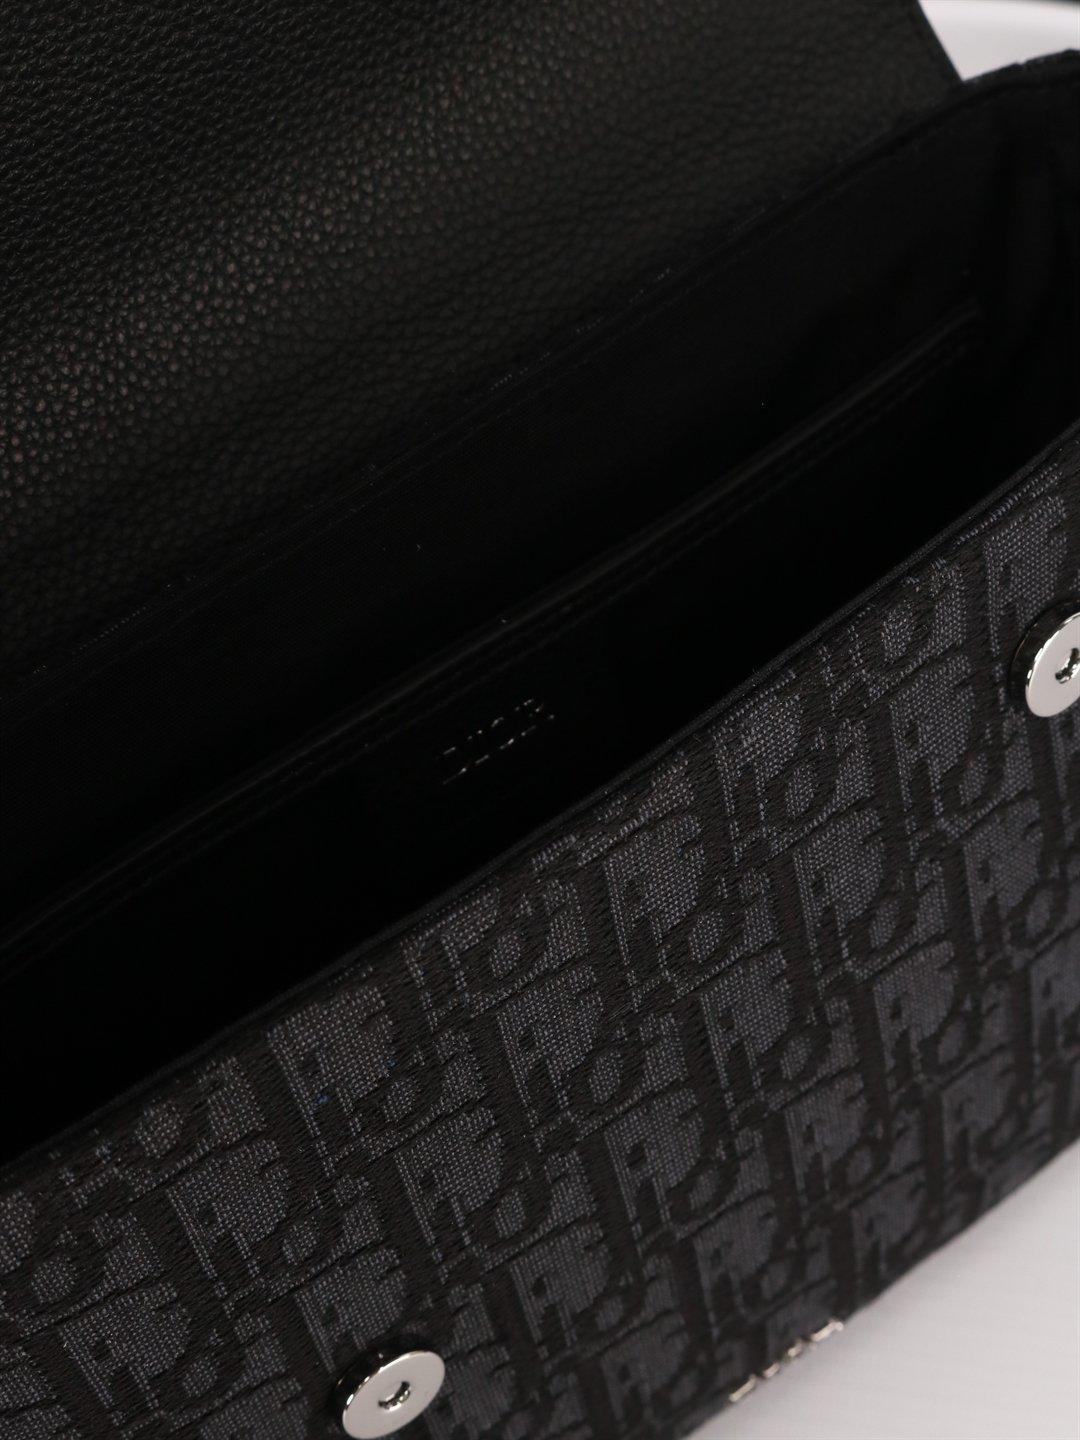 Dior - Mini Saddle Bag with Strap Black Dior Oblique Jacquard and Grained Calfskin - Men